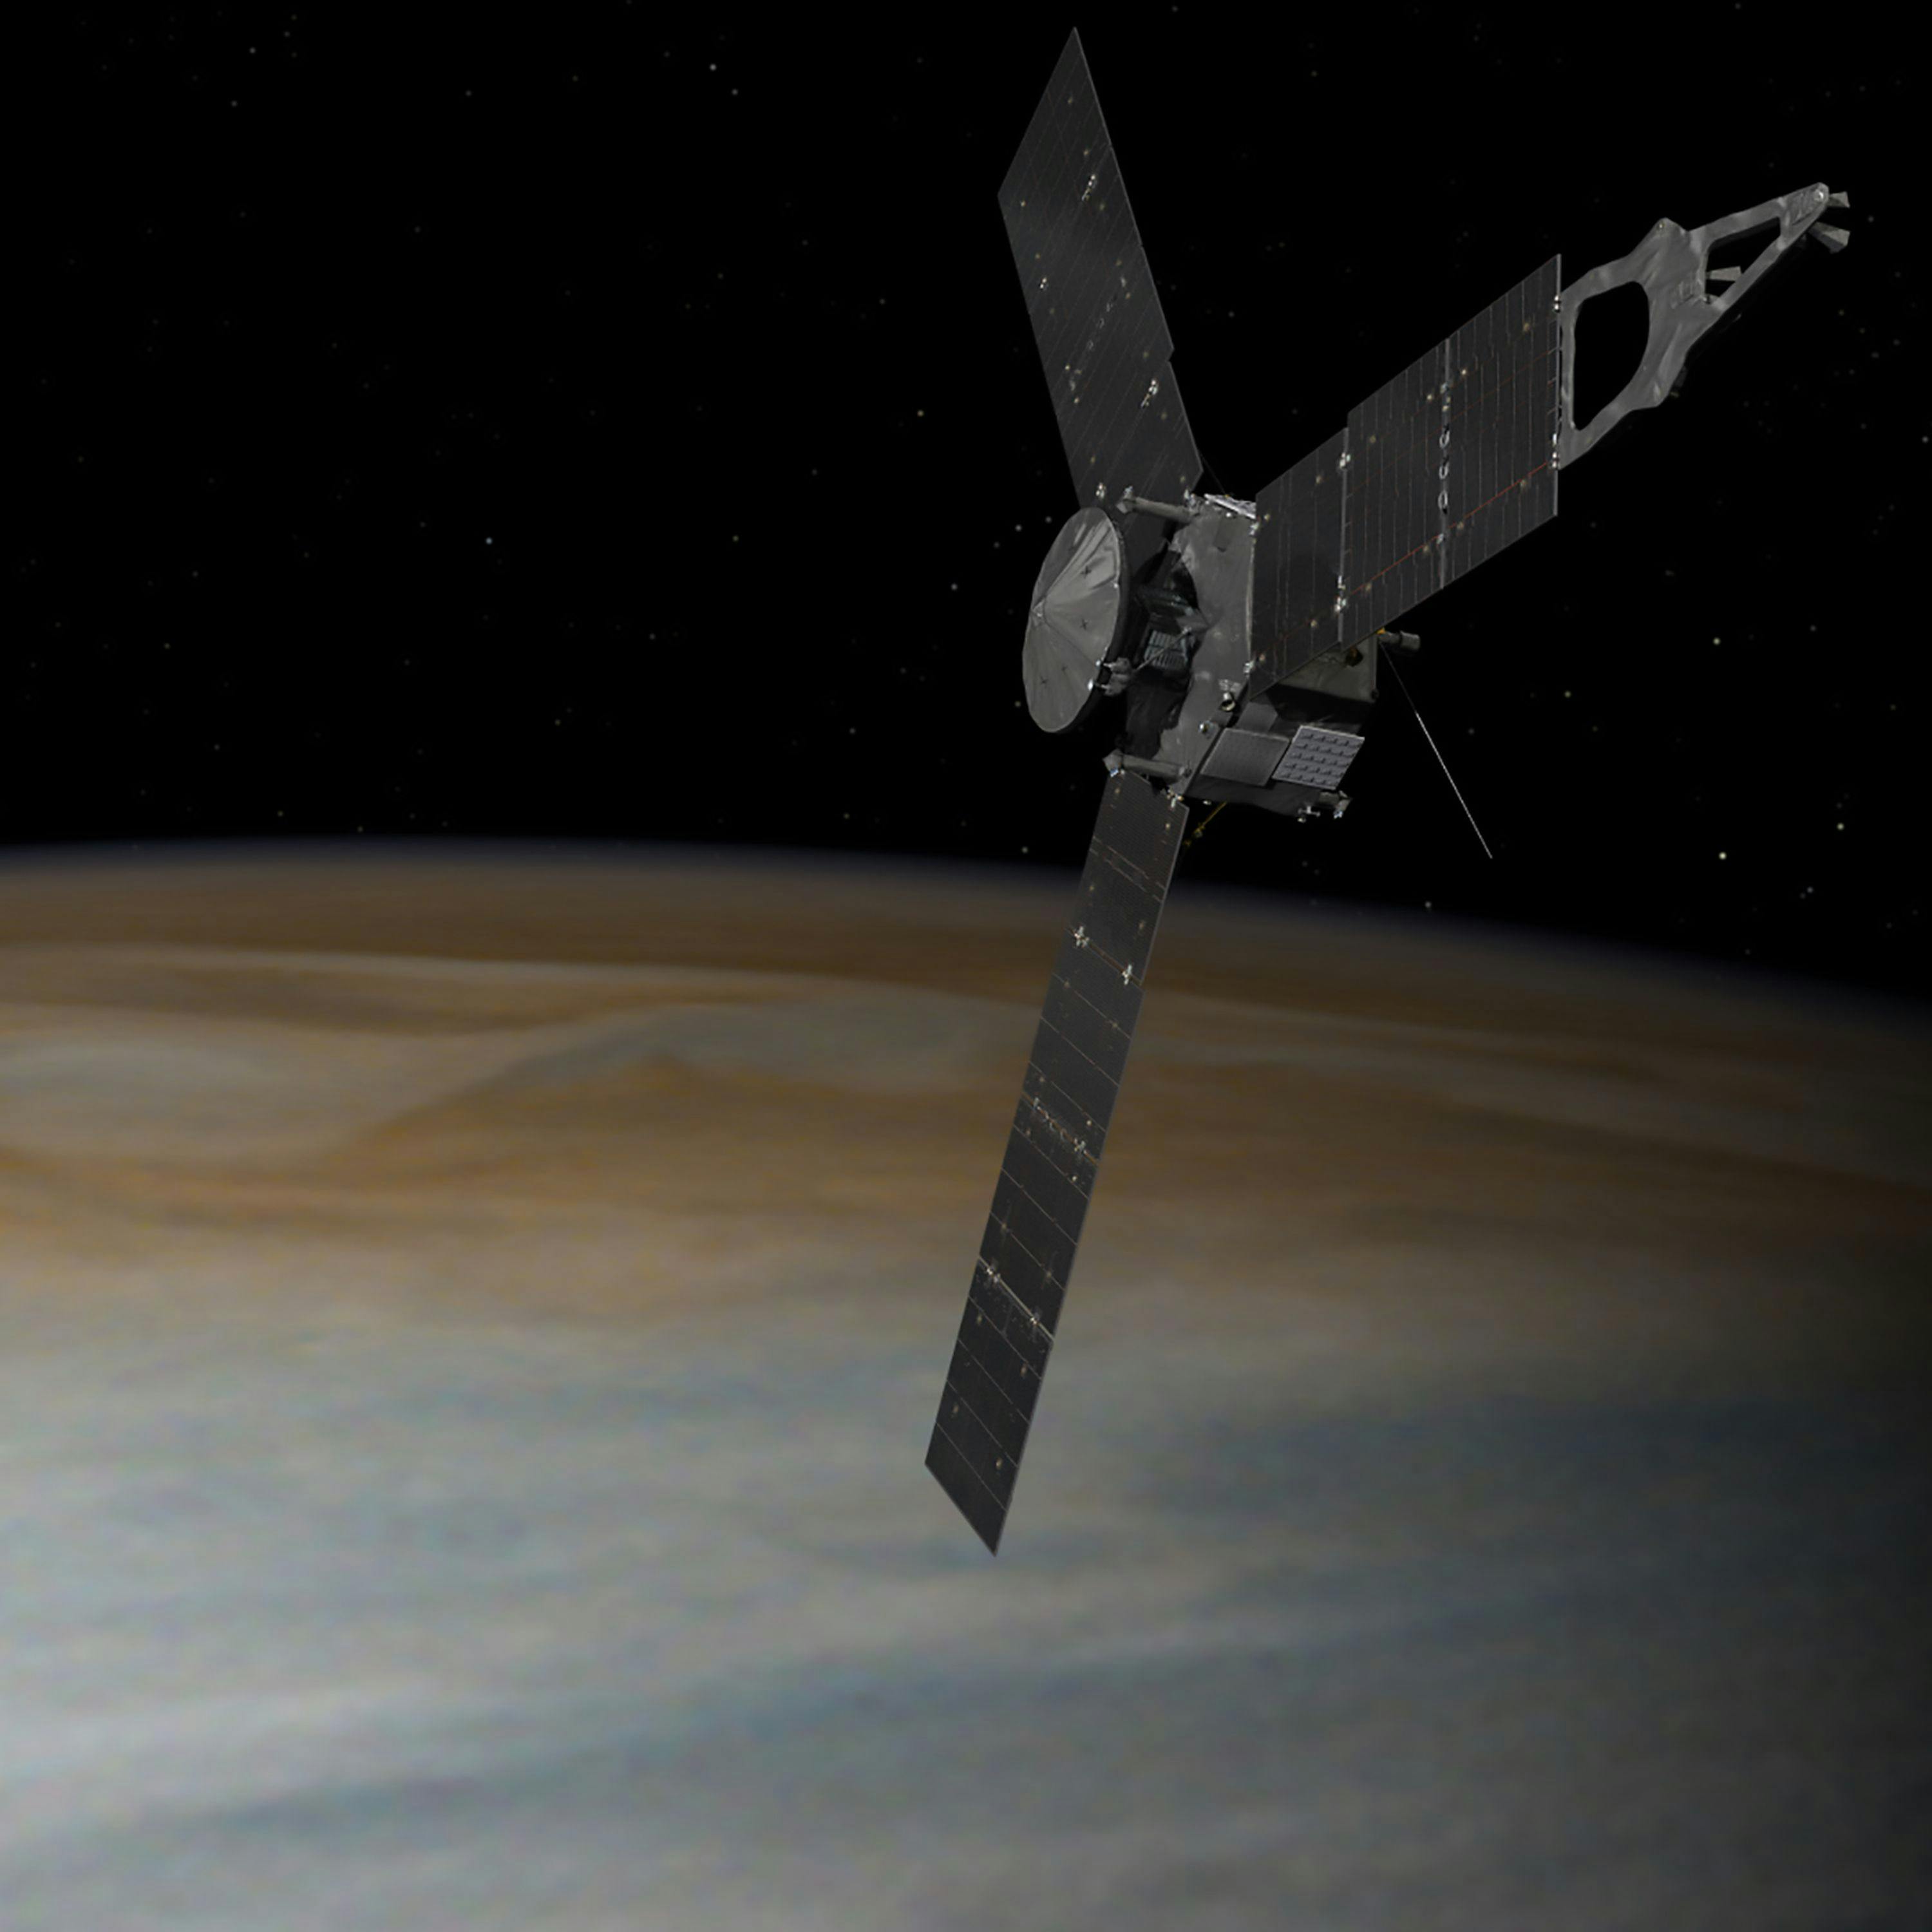 Radio Astronomy, Episode 3: Juno at Jupiter